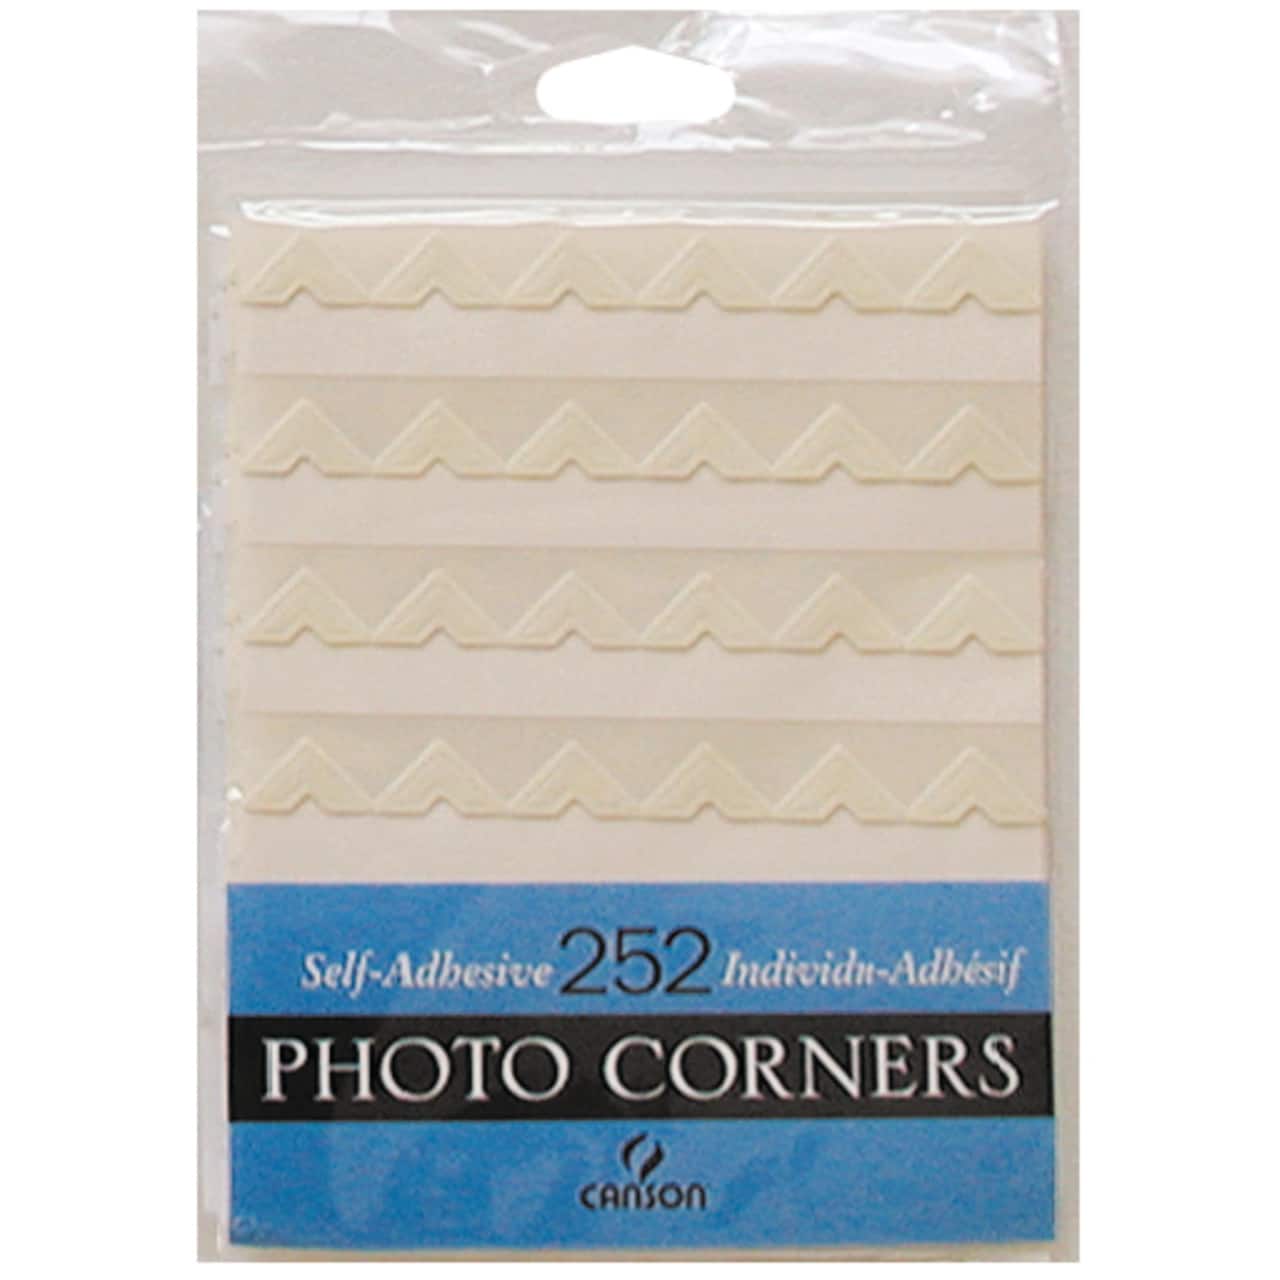 Canson&#xAE; Self-Adhesive Photo Corners